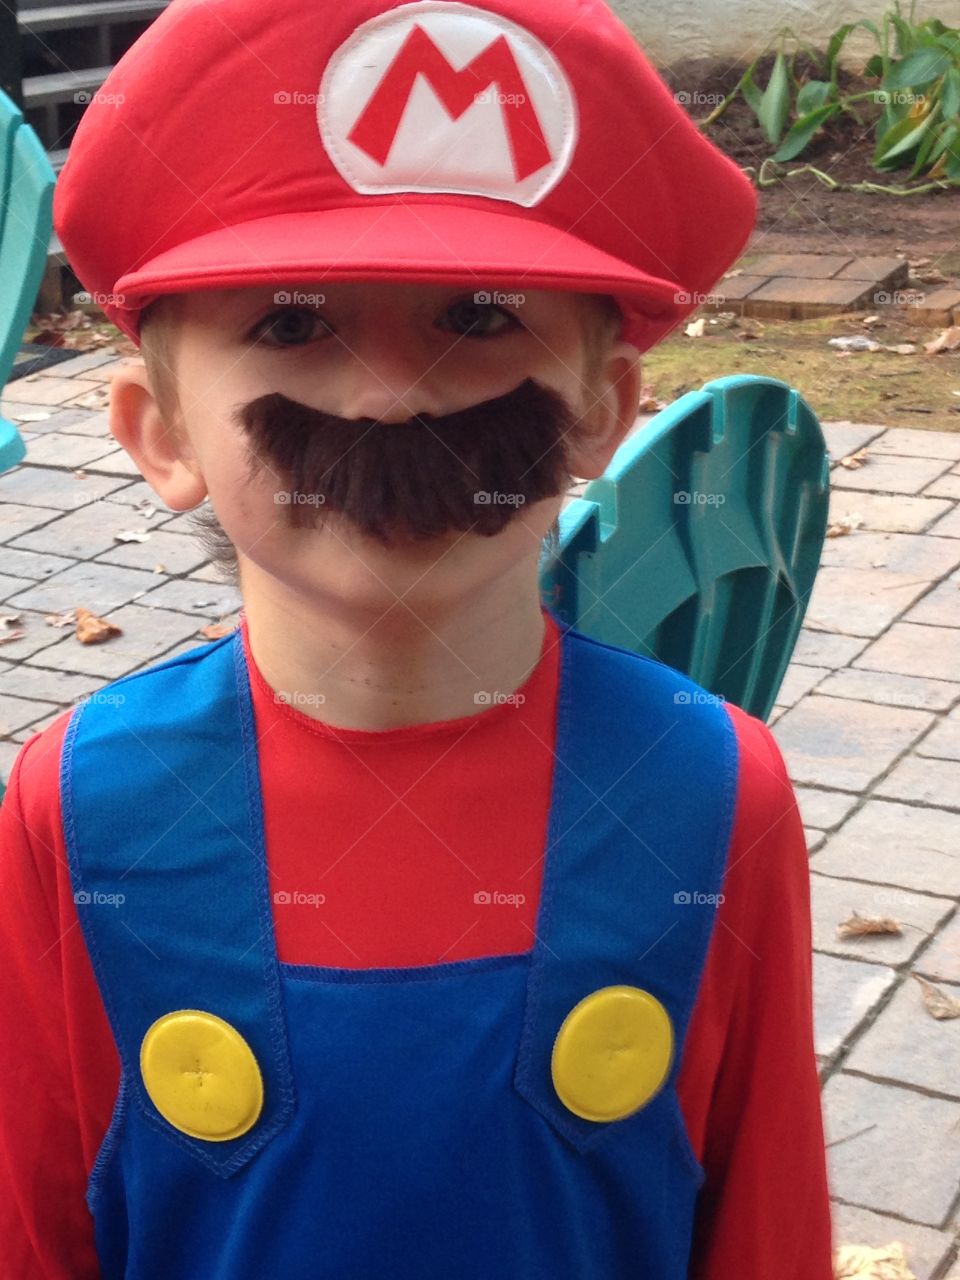 Mustache for Mario